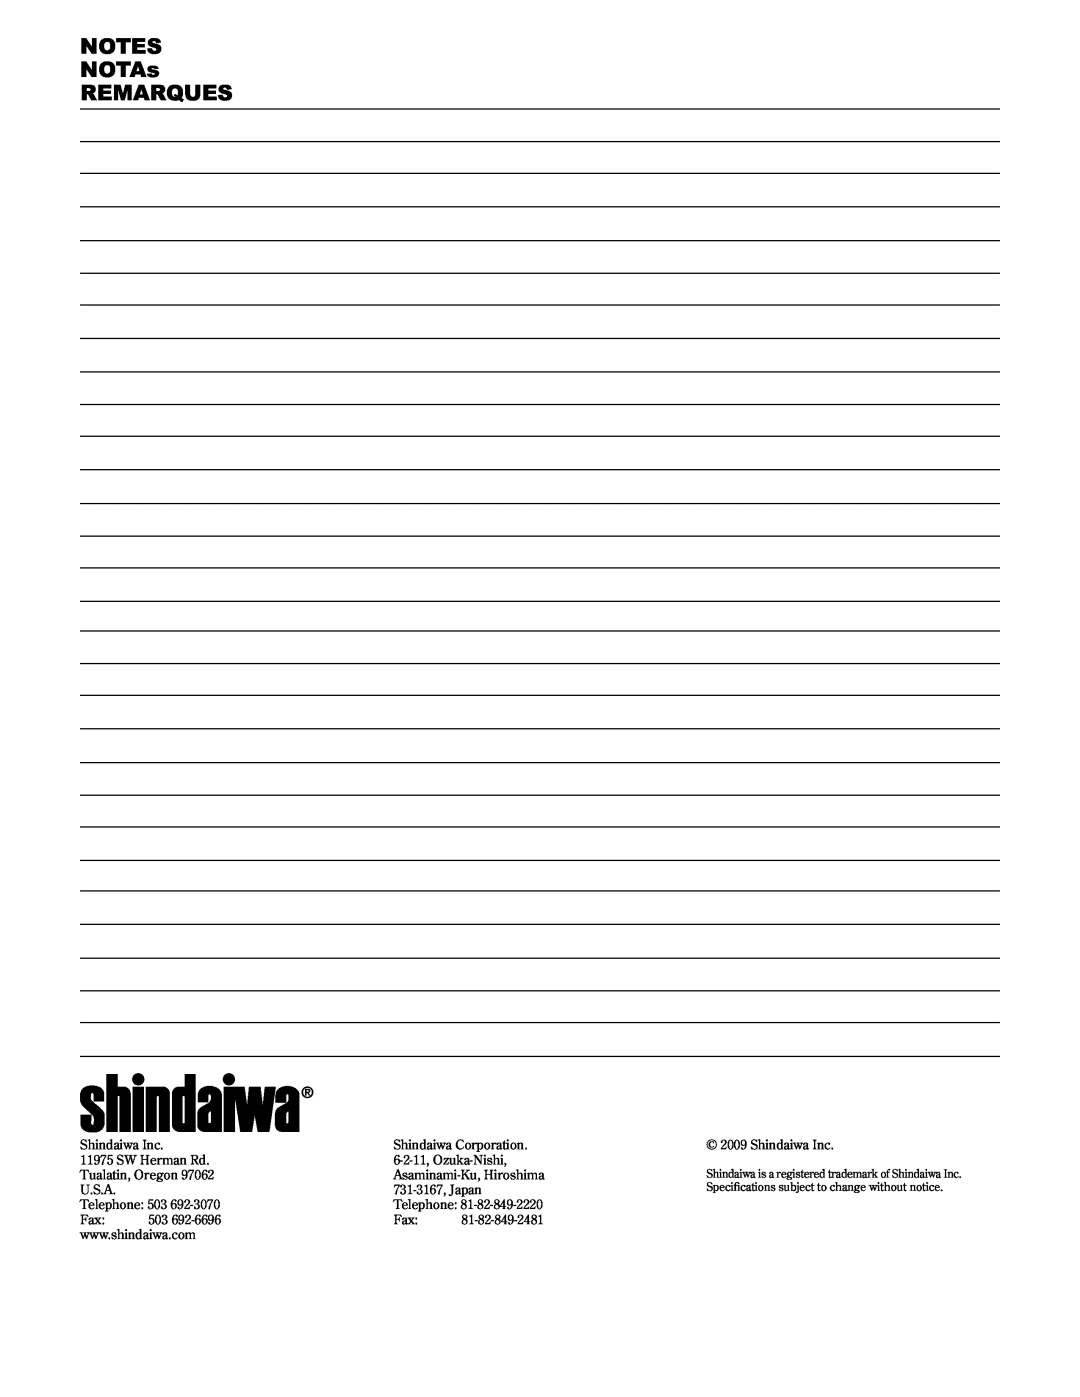 Shindaiwa 89304, C3410/EVC manual NOTES NOTAs REMARQUES 